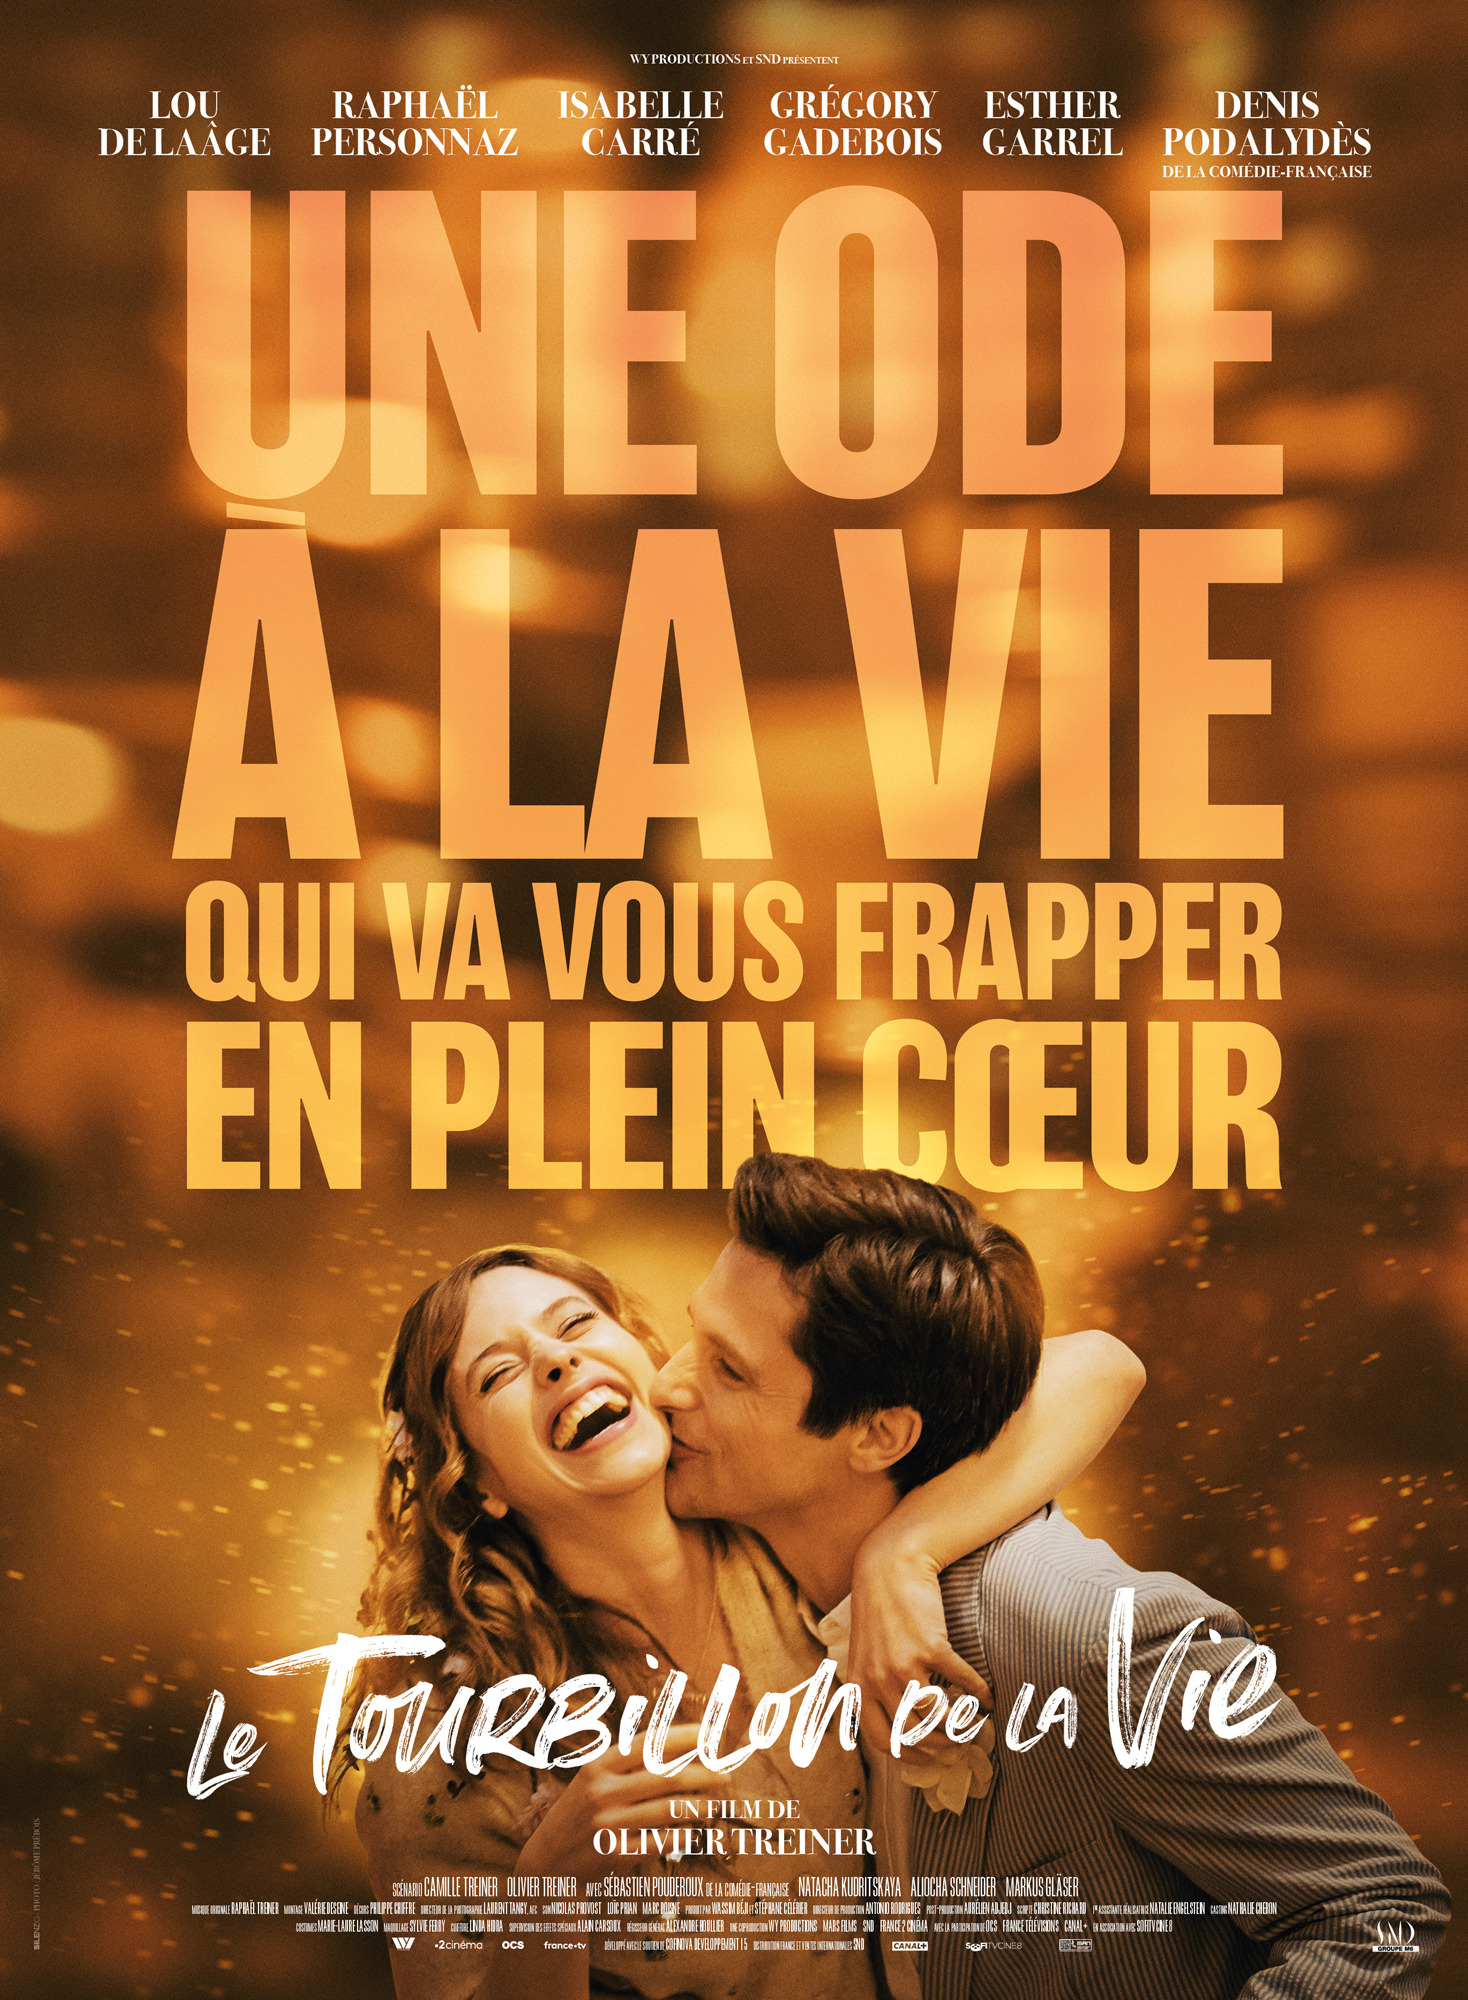 Mega Sized Movie Poster Image for Le tourbillon de la vie (#5 of 5)